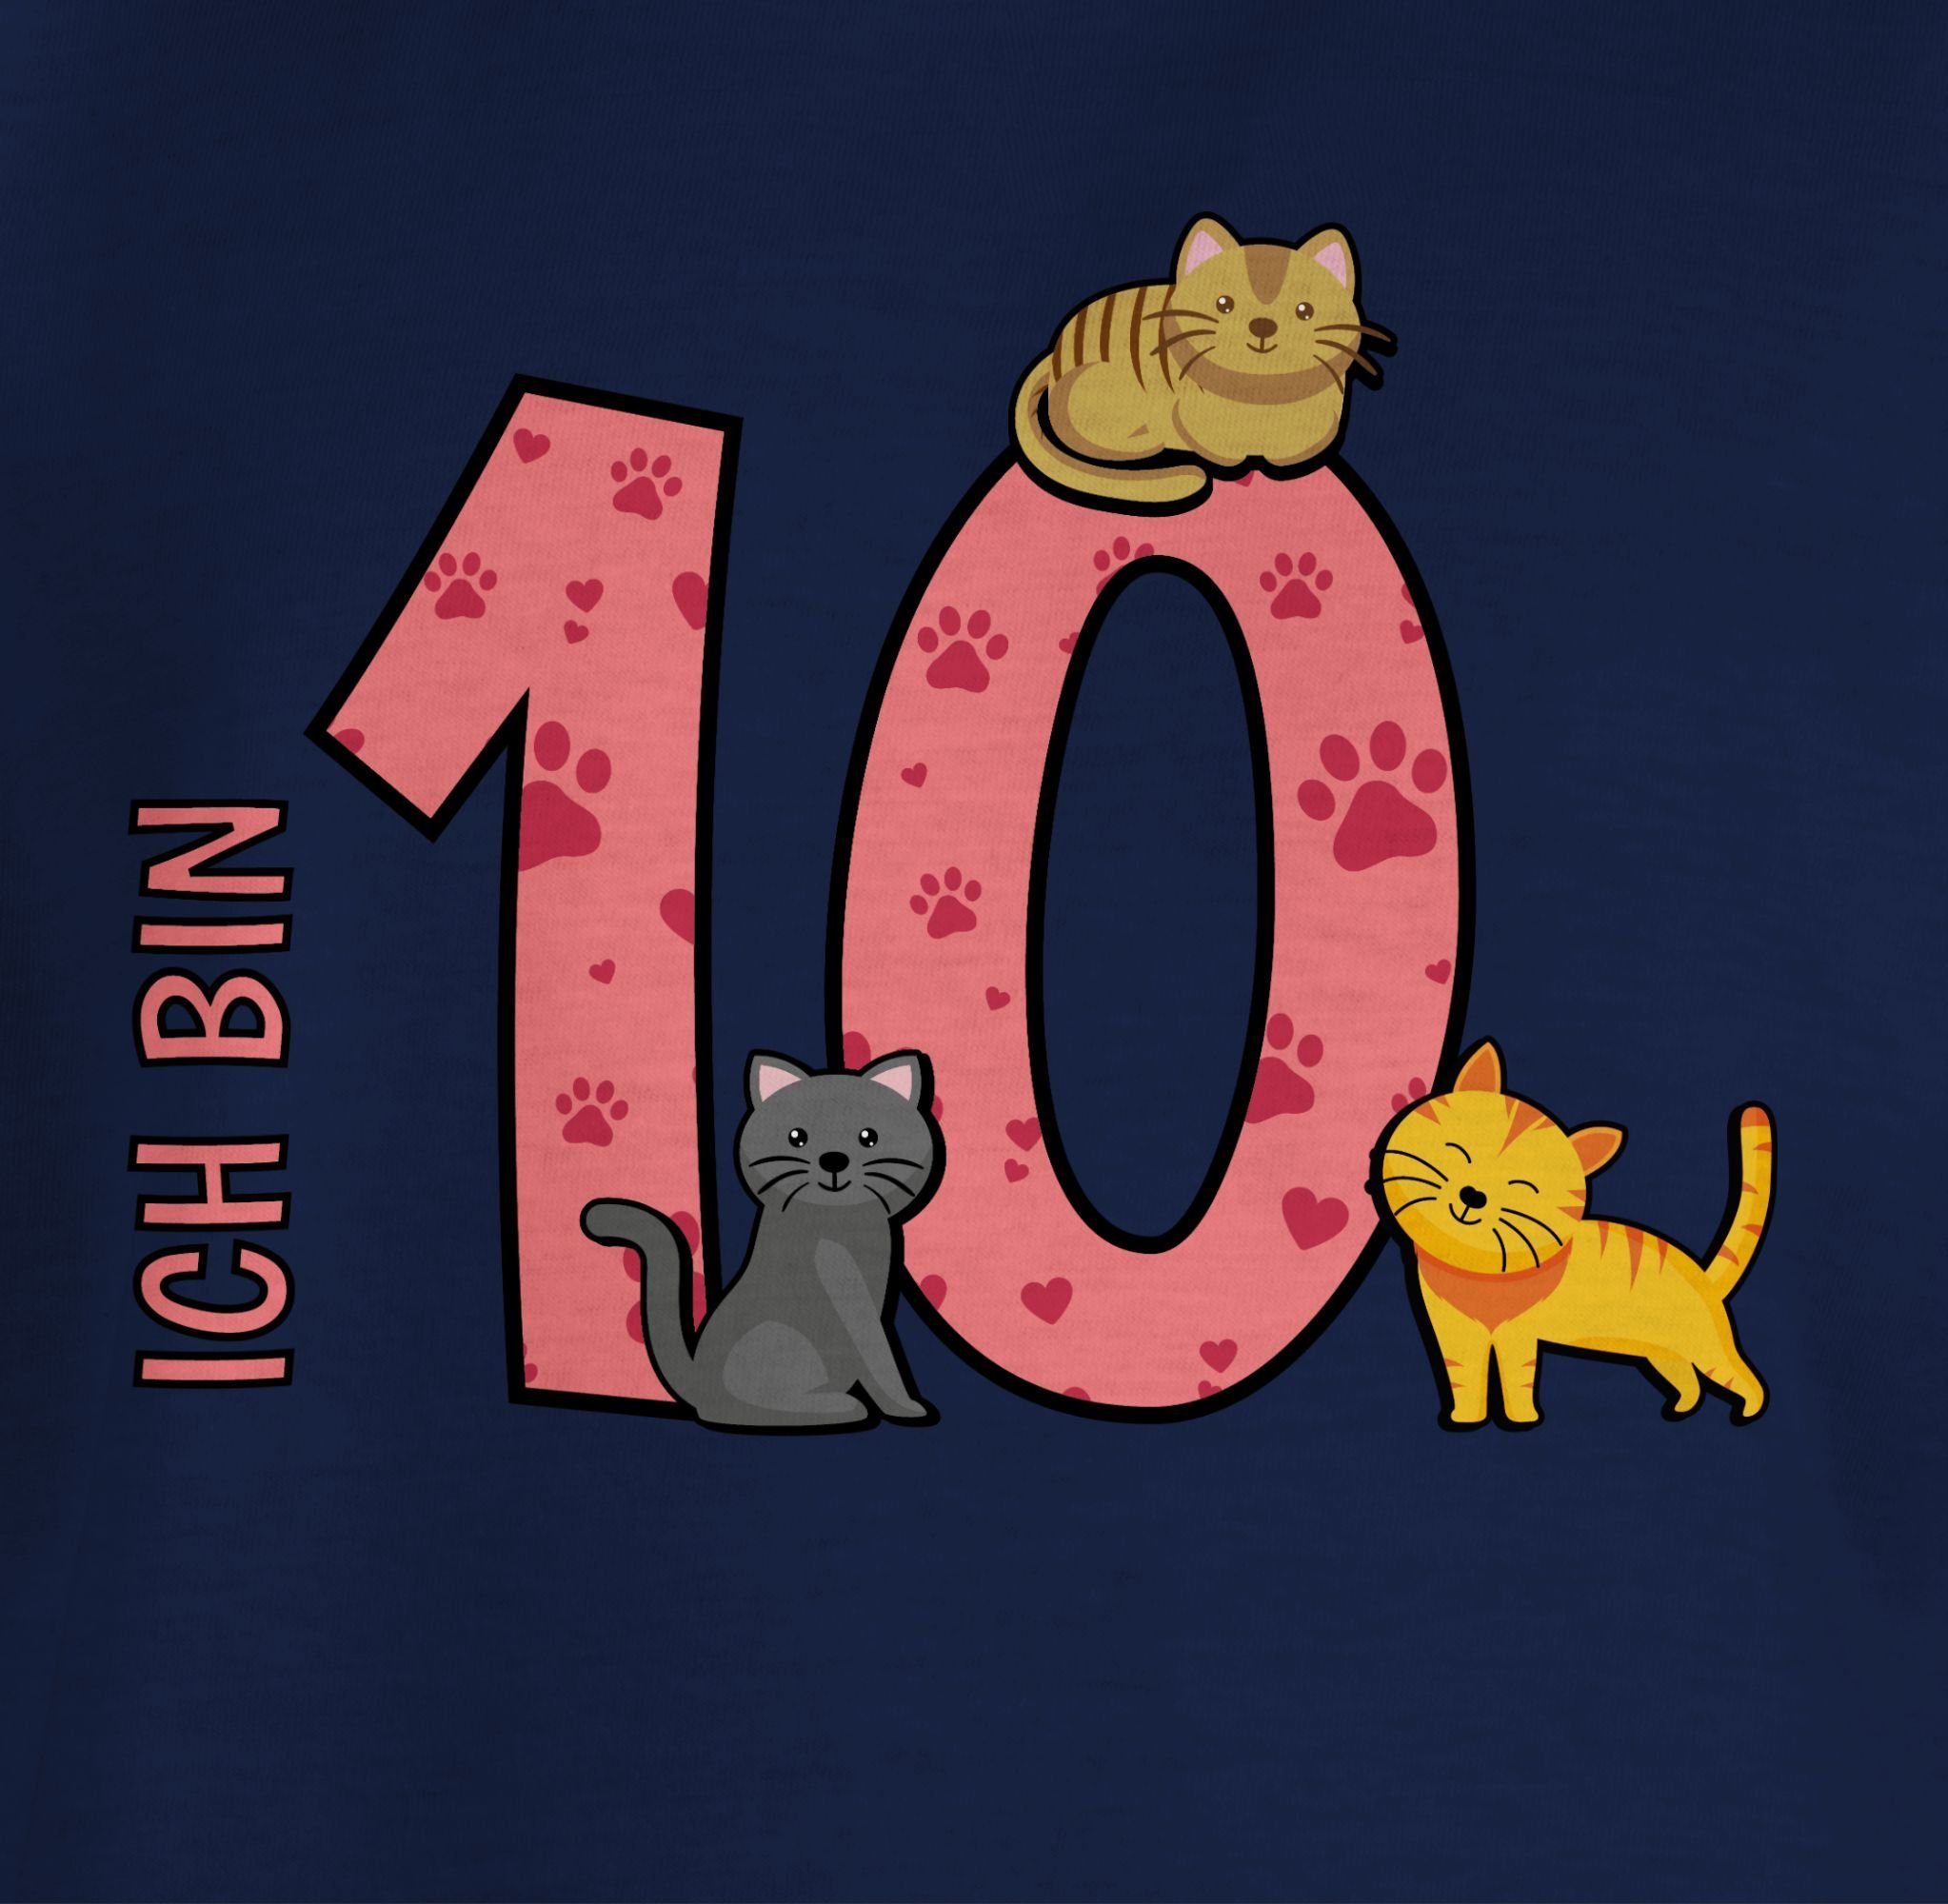 Katzen T-Shirt Geburtstag Zehnter Shirtracer Dunkelblau 10. 2